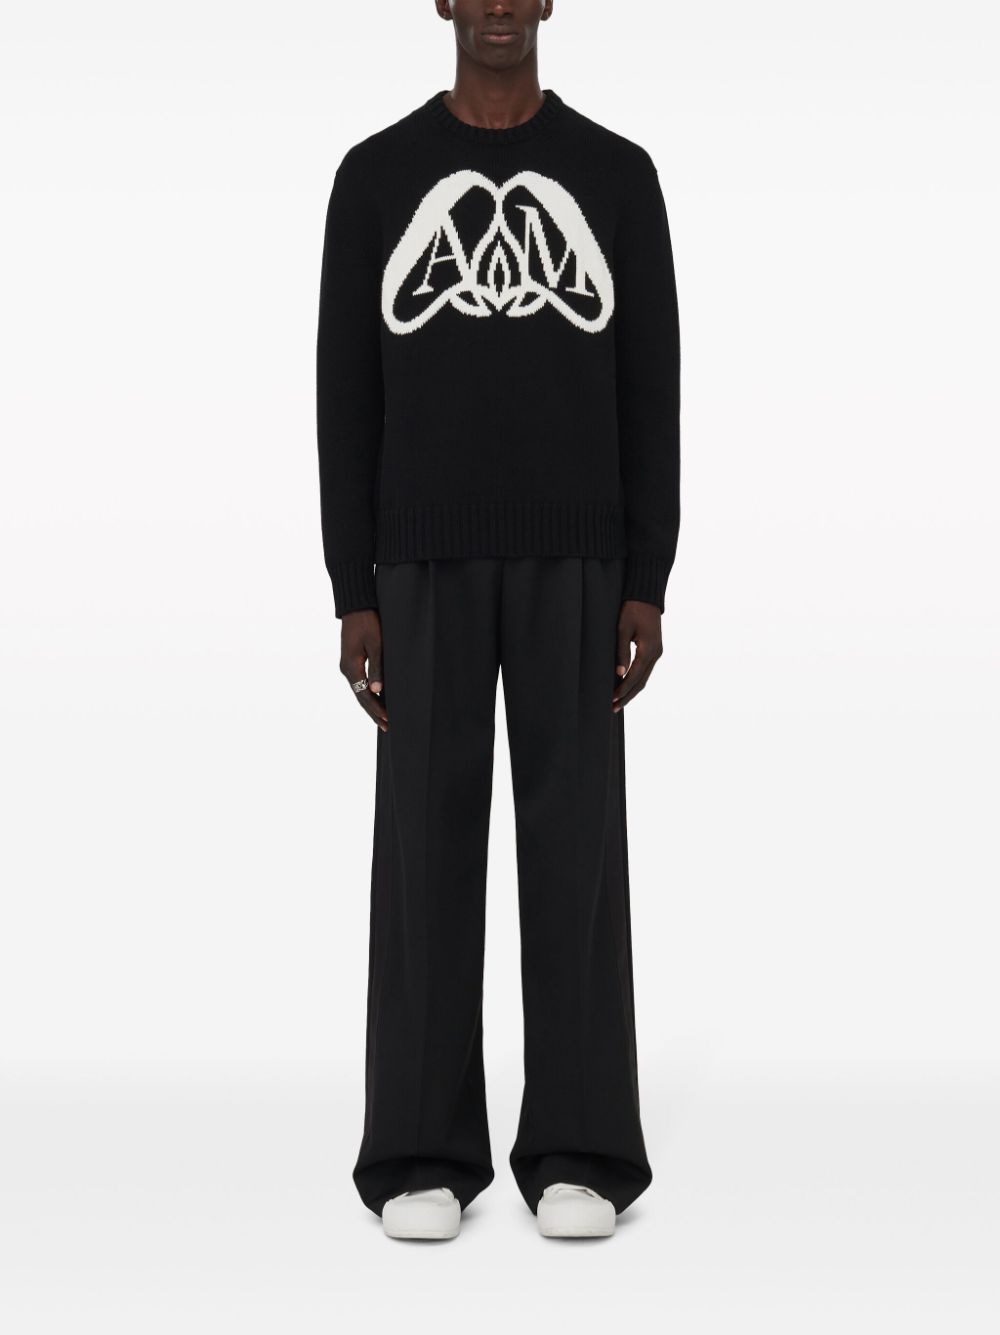 ALEXANDER MCQUEEN Elegant Logo Intarsia Cotton Sweatshirt for Men in Black and White